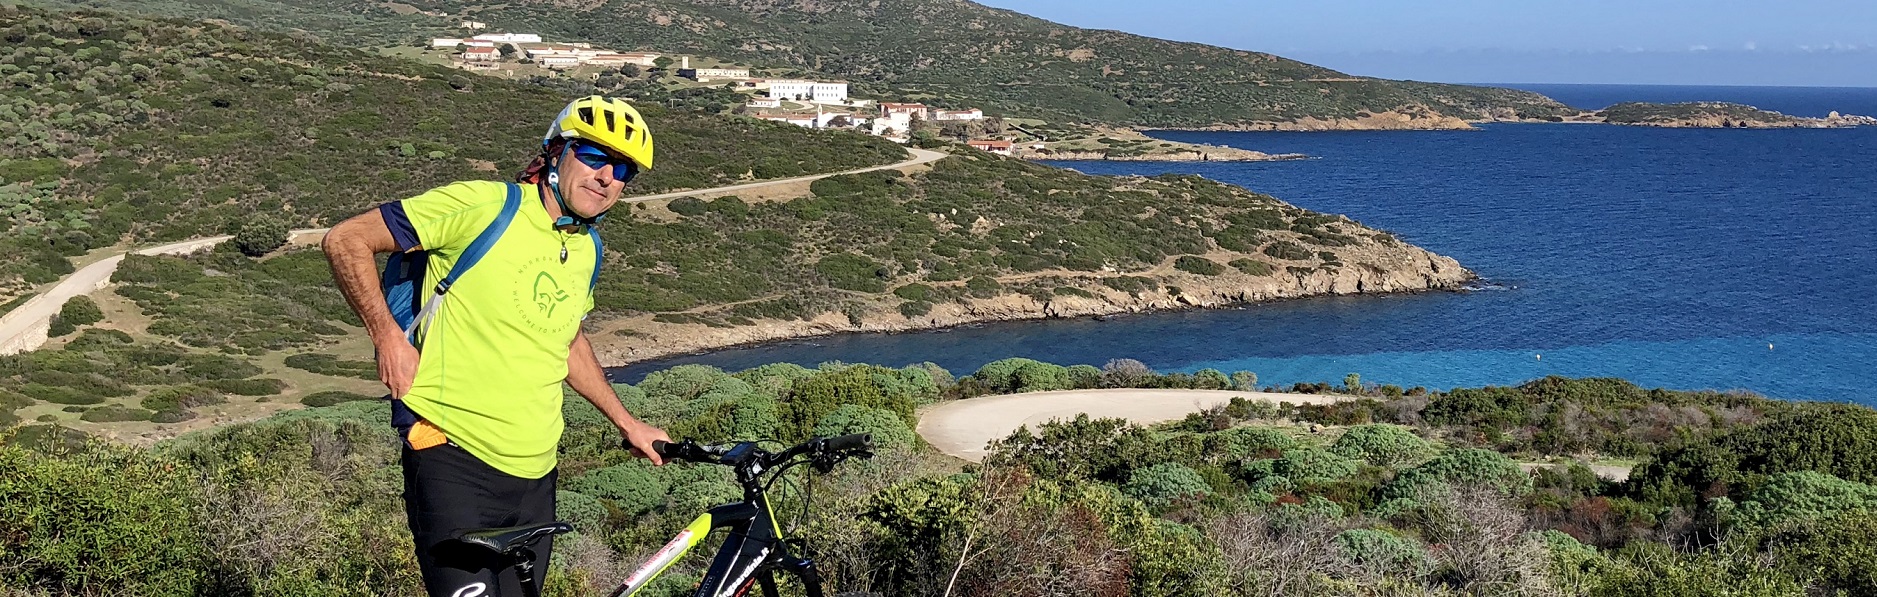 Asinara Ebike Tour - One day